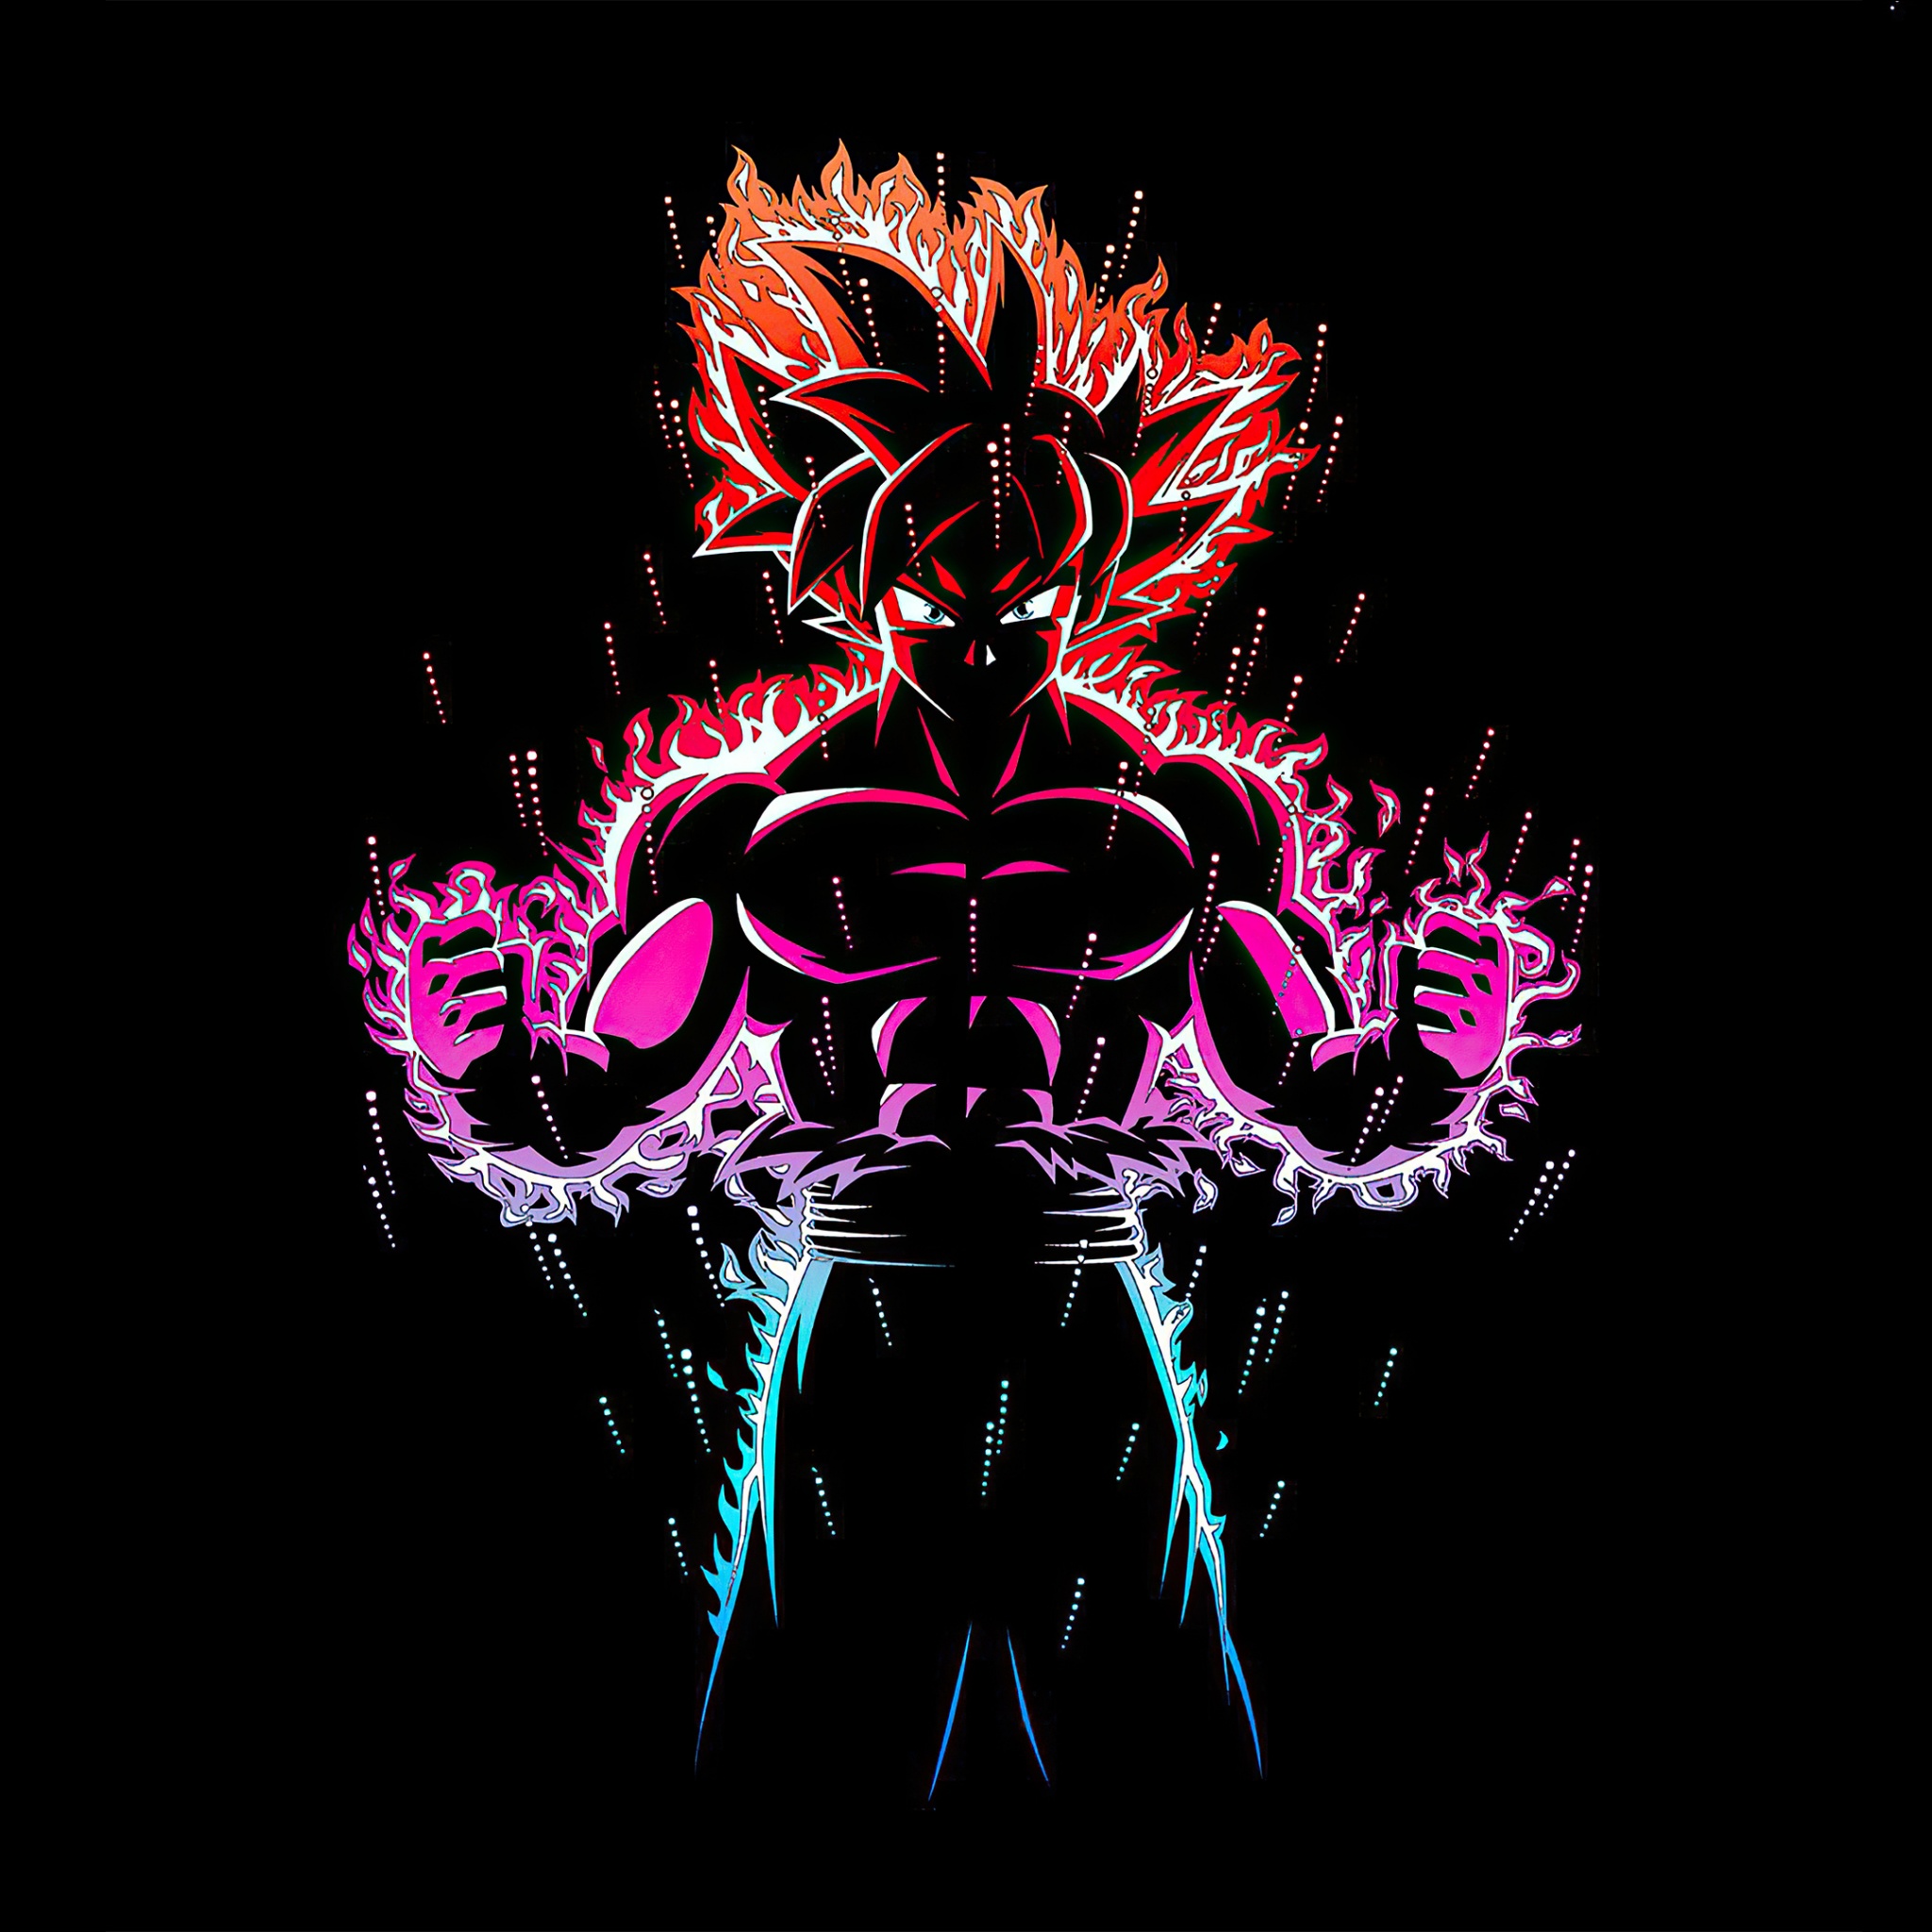 Ultra Instinct Goku 4K Wallpaper, Black background, Dragon Ball Z